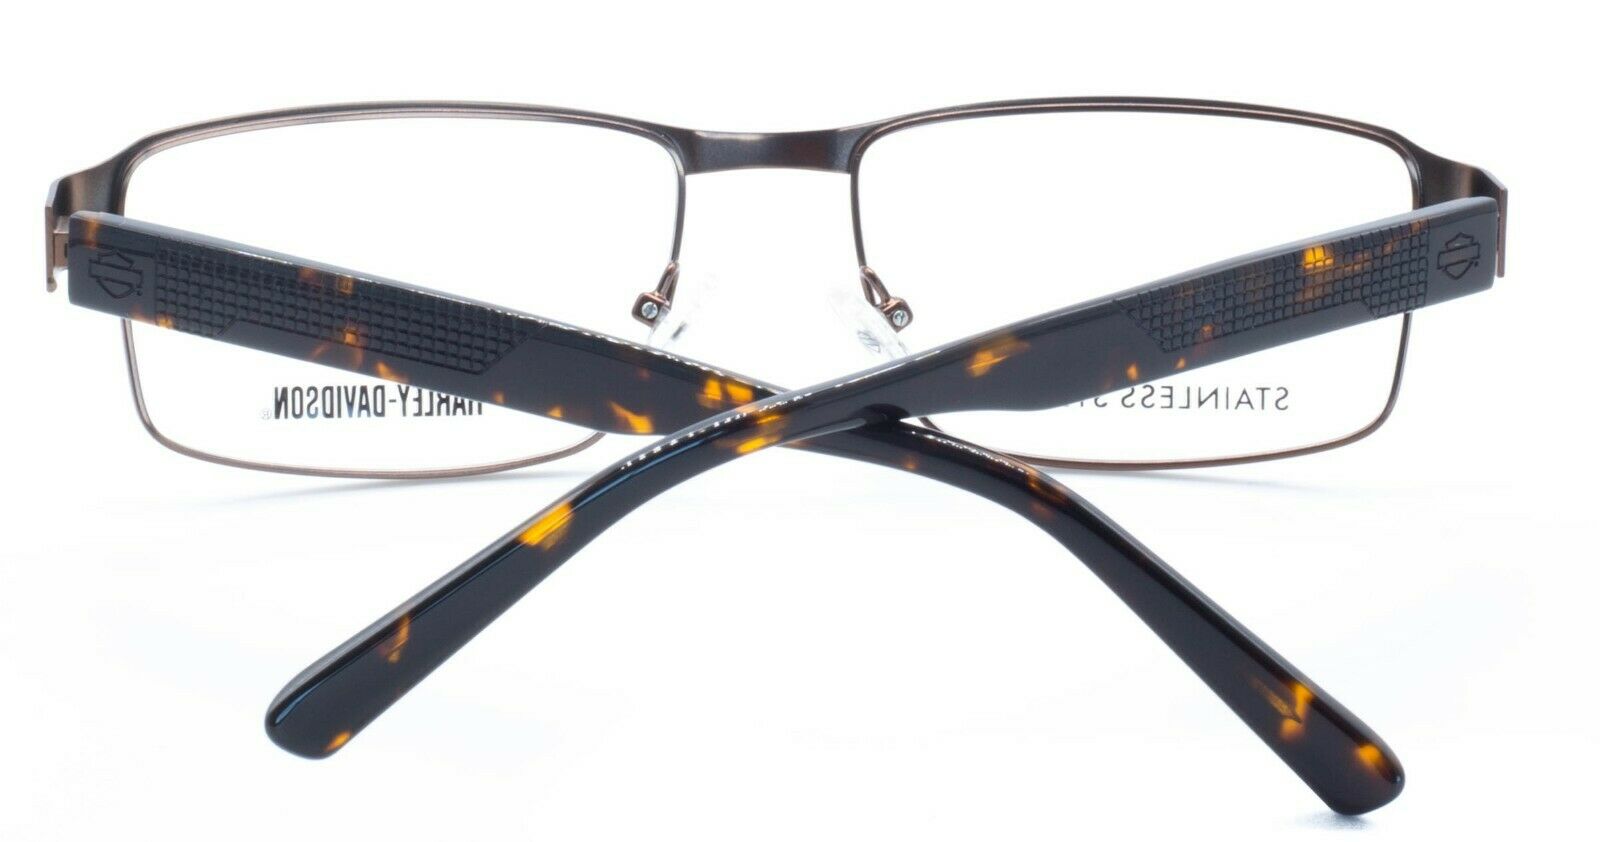 HARLEY-DAVIDSON HD0746 049 55mm Eyewear FRAMES RX Optical Eyeglasses Glasses New